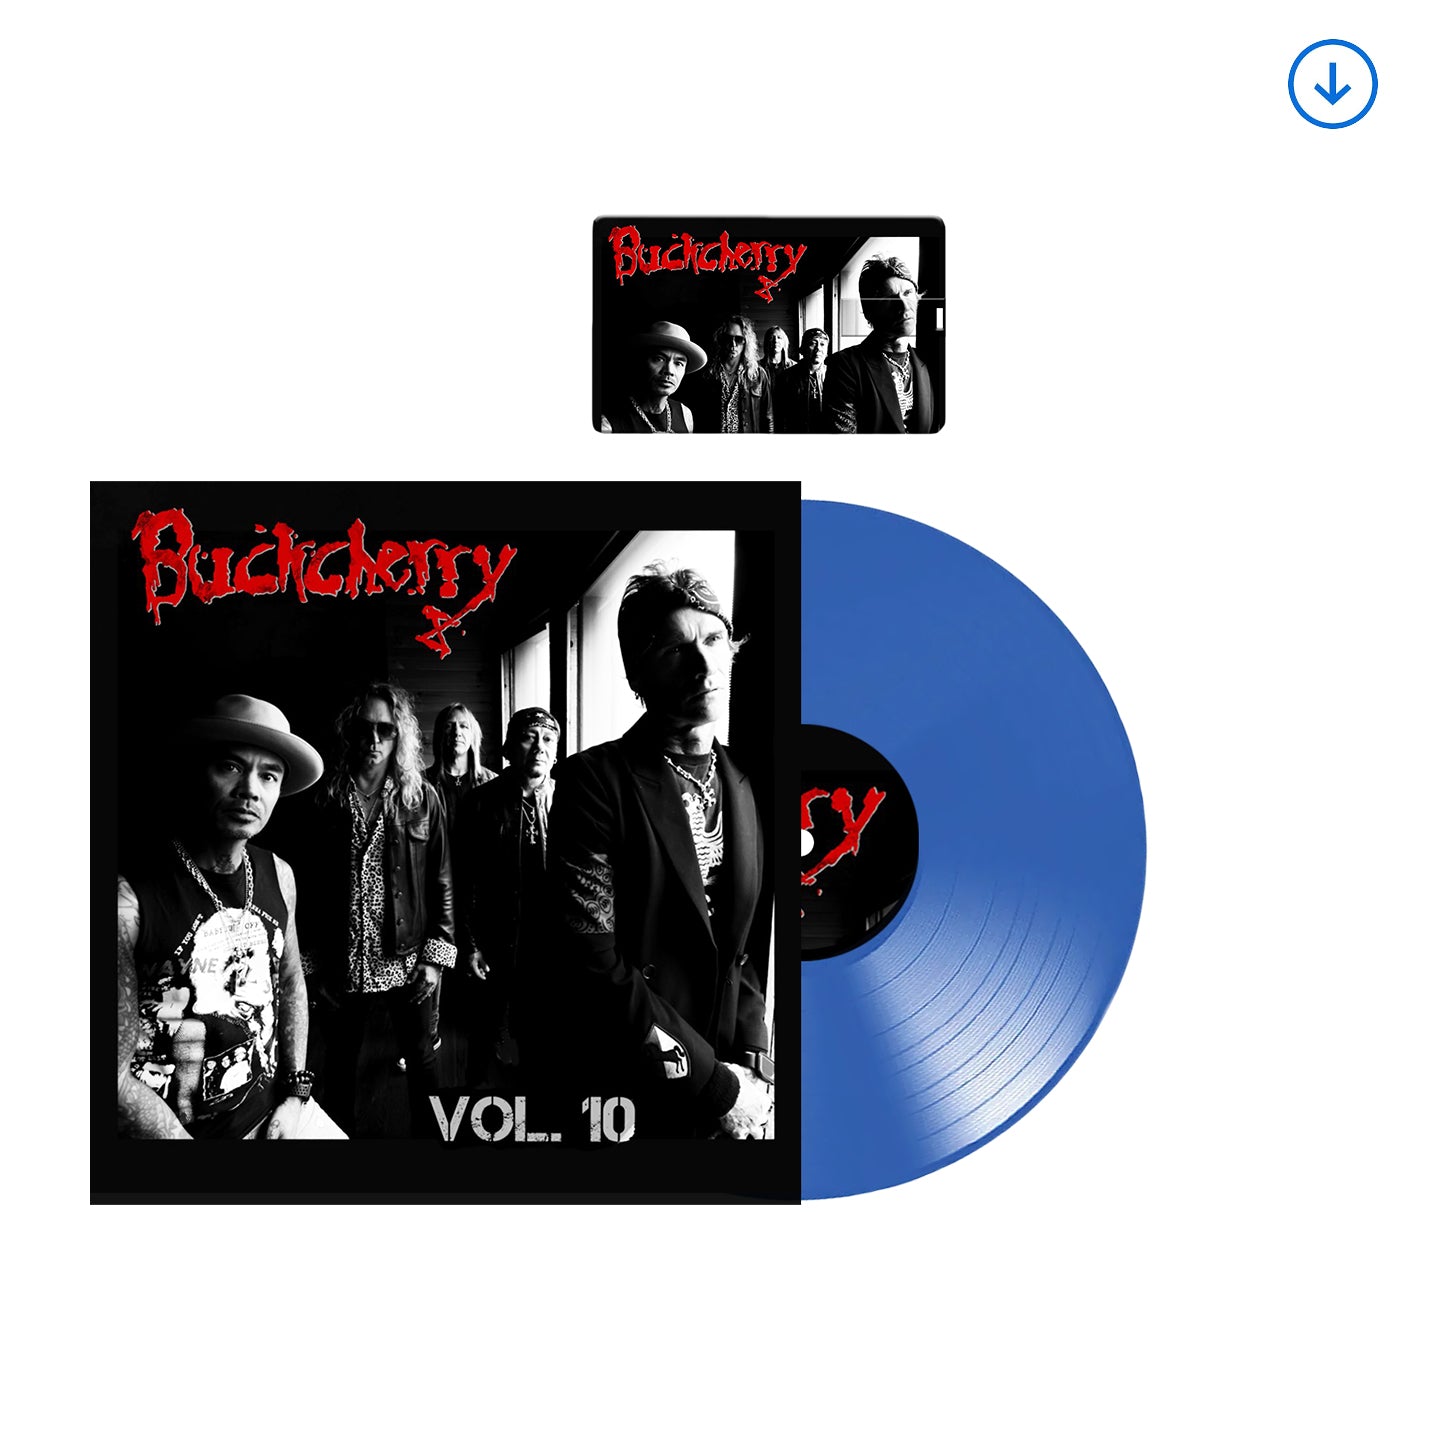 Buckcherry "Vol. 10" Blue Vinyl, Credit Card Shaped USB